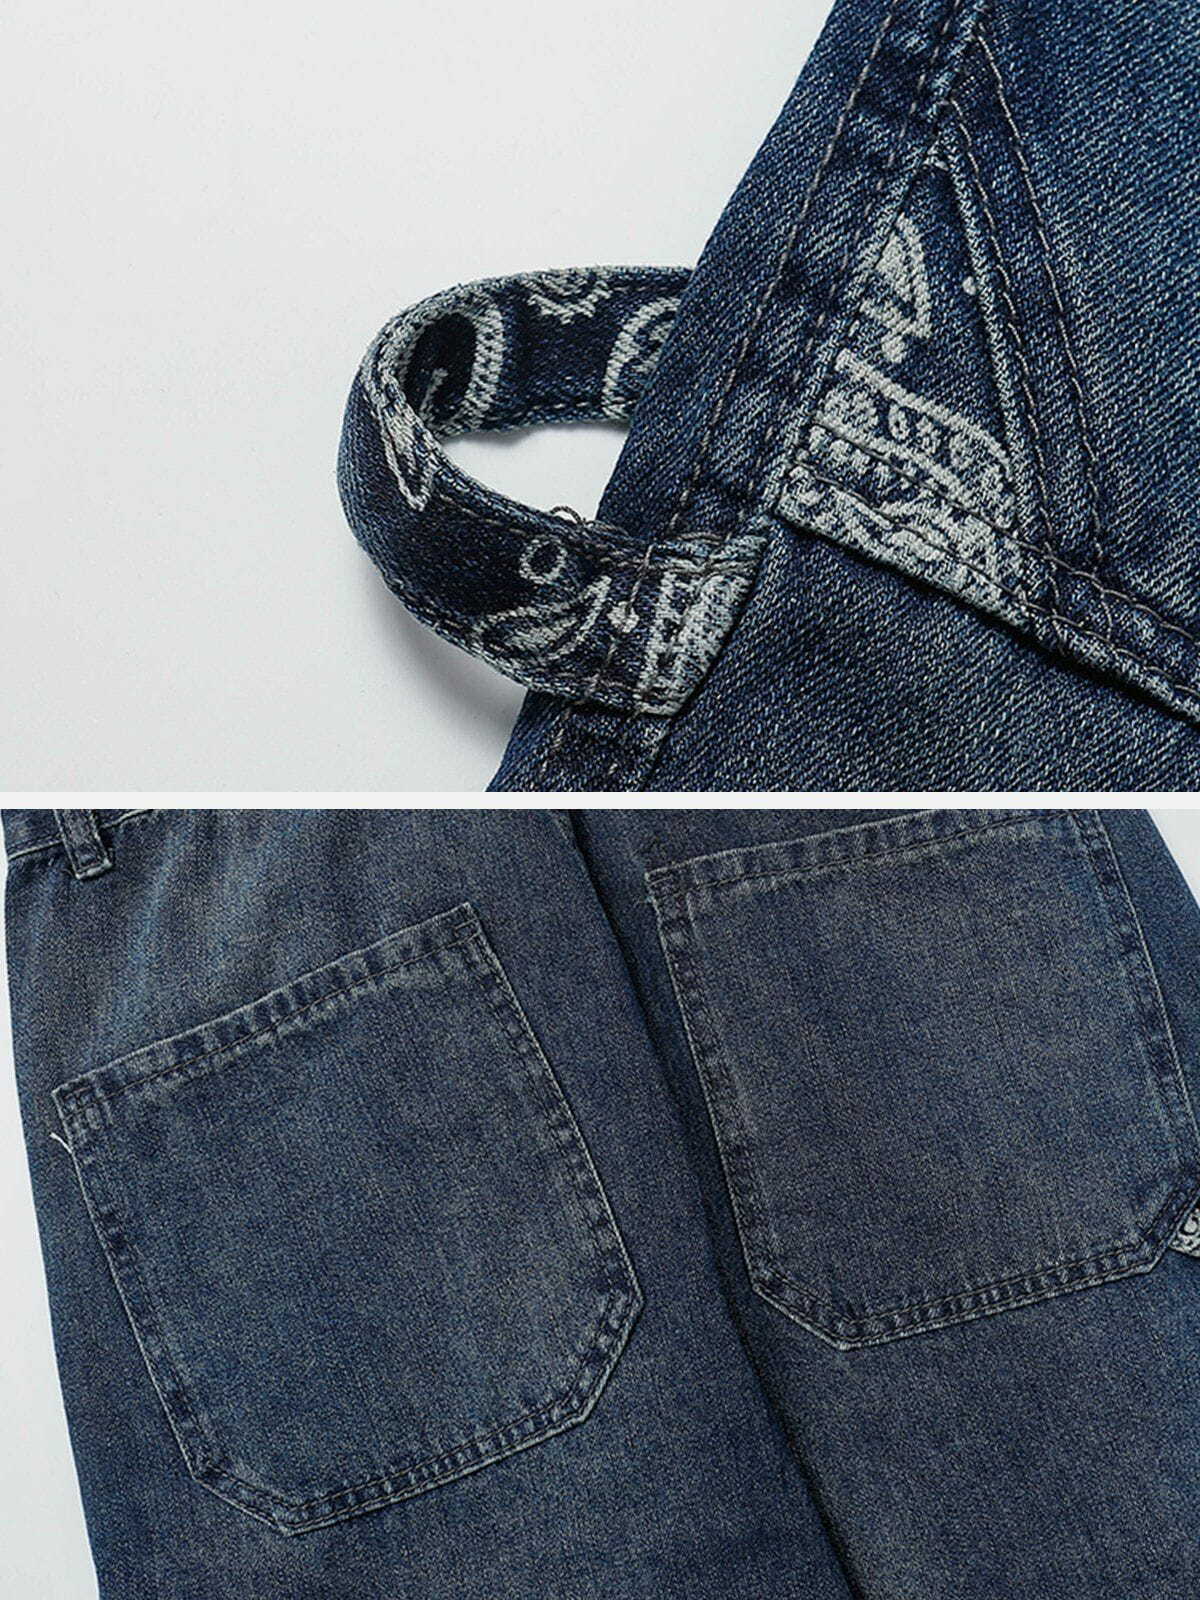 patchwork denim jeans edgy streetwear essential 3501